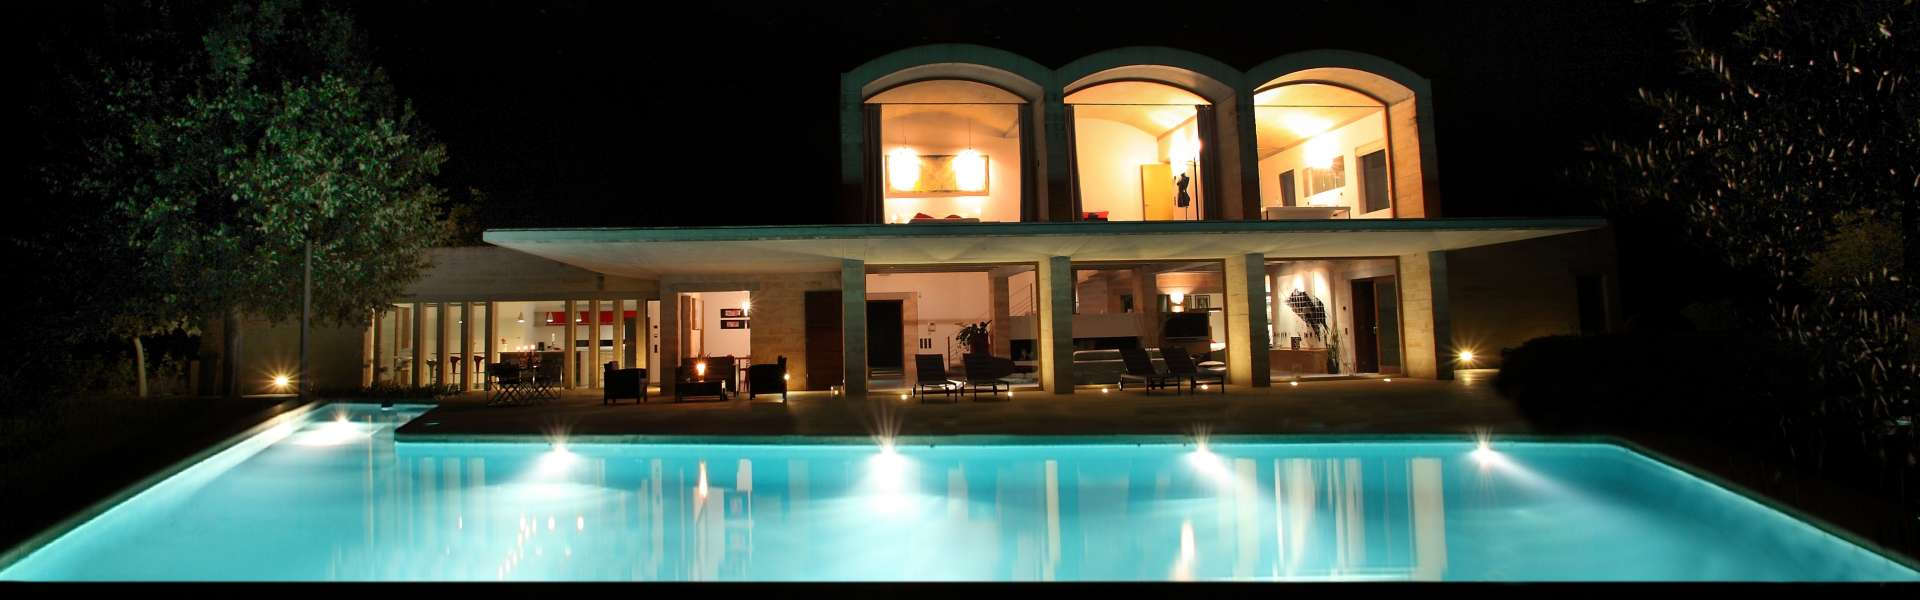 Montemar Immobilien Mallorca - Villa mit Pool